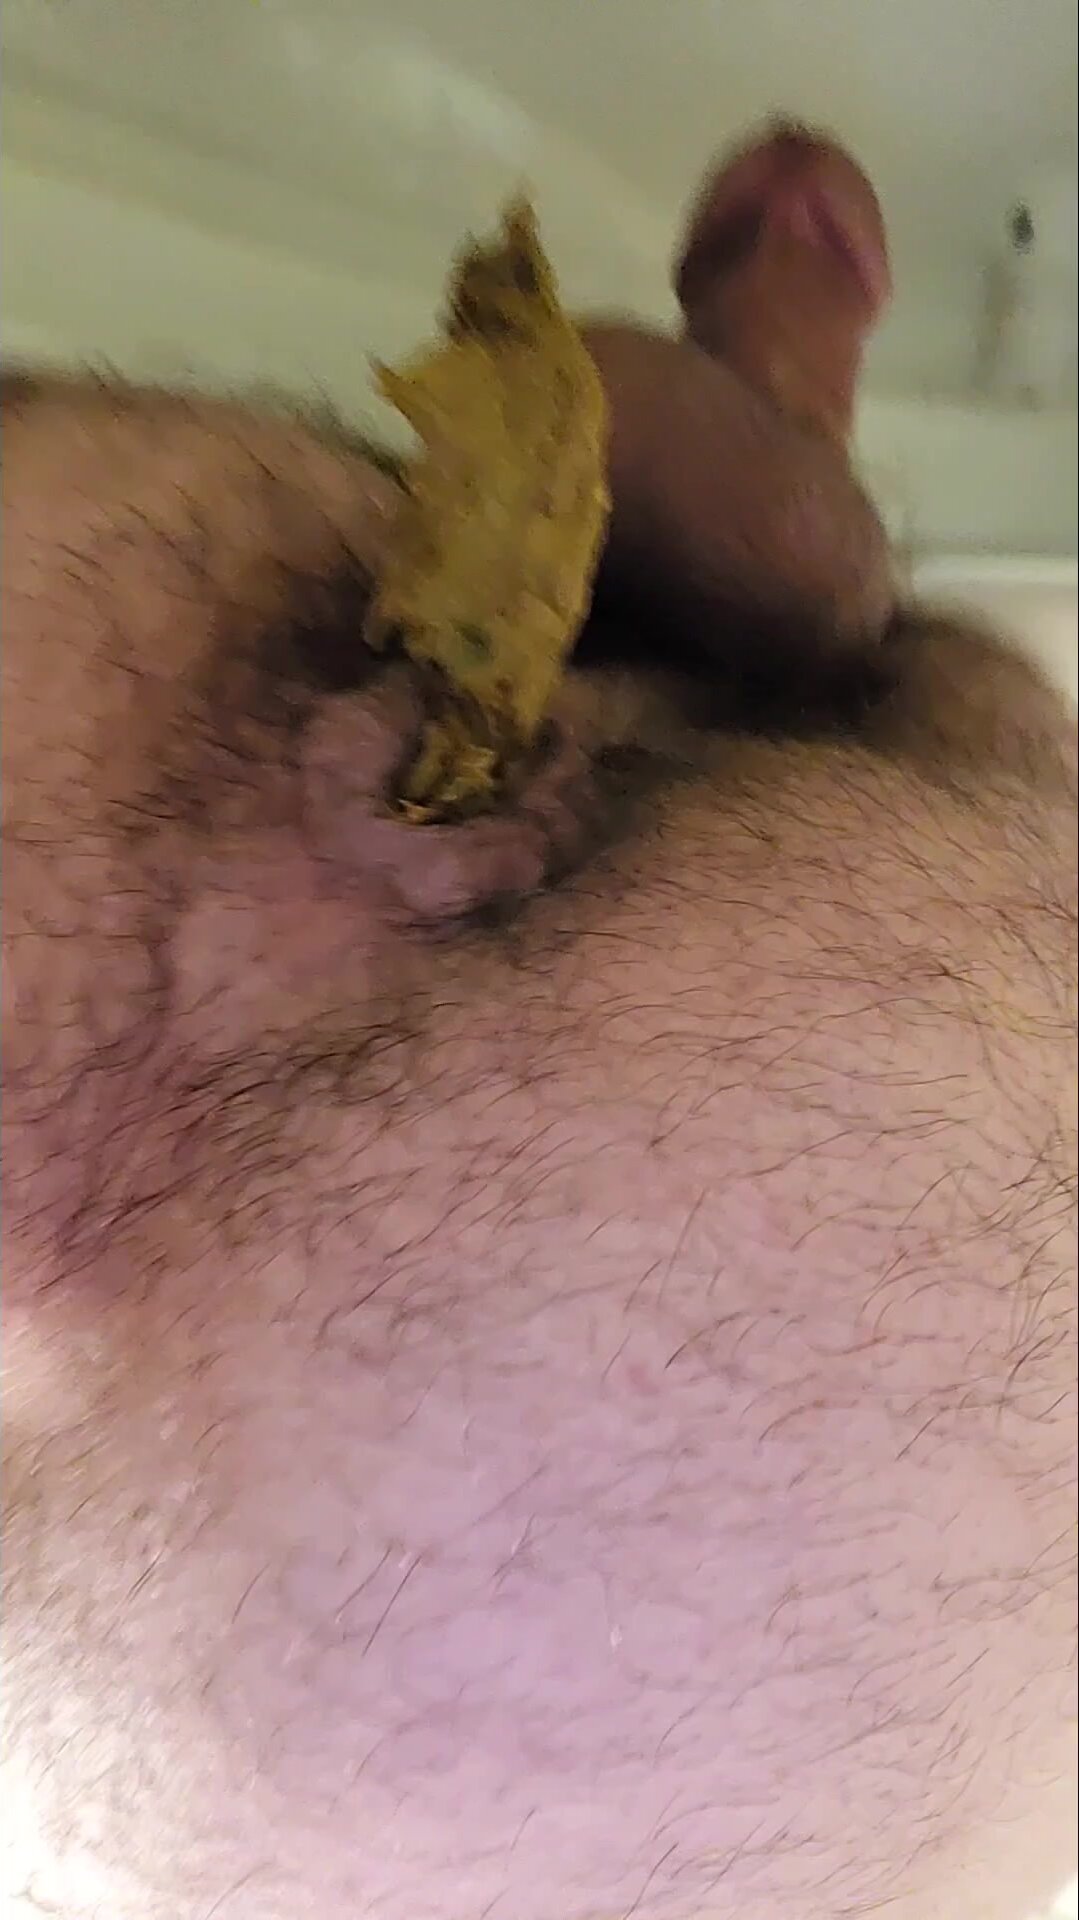 Shitting on a toilet